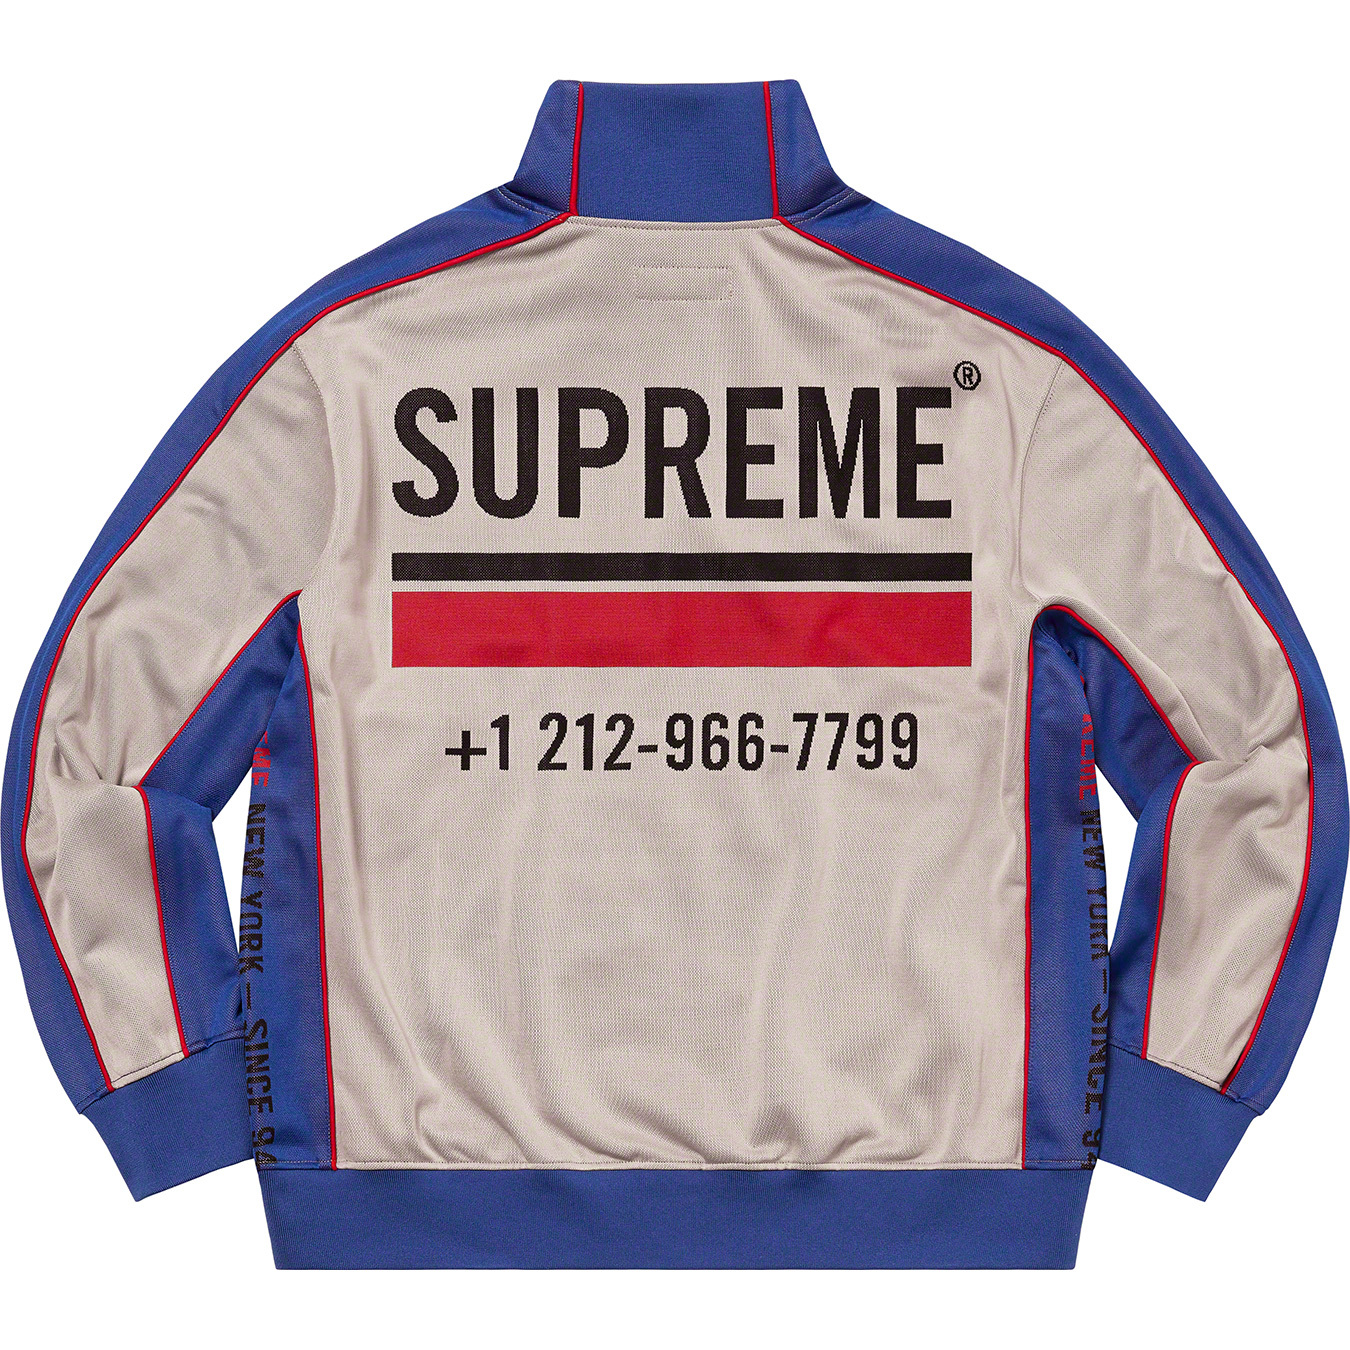 Supreme World Famous Jacquard Track Jacket